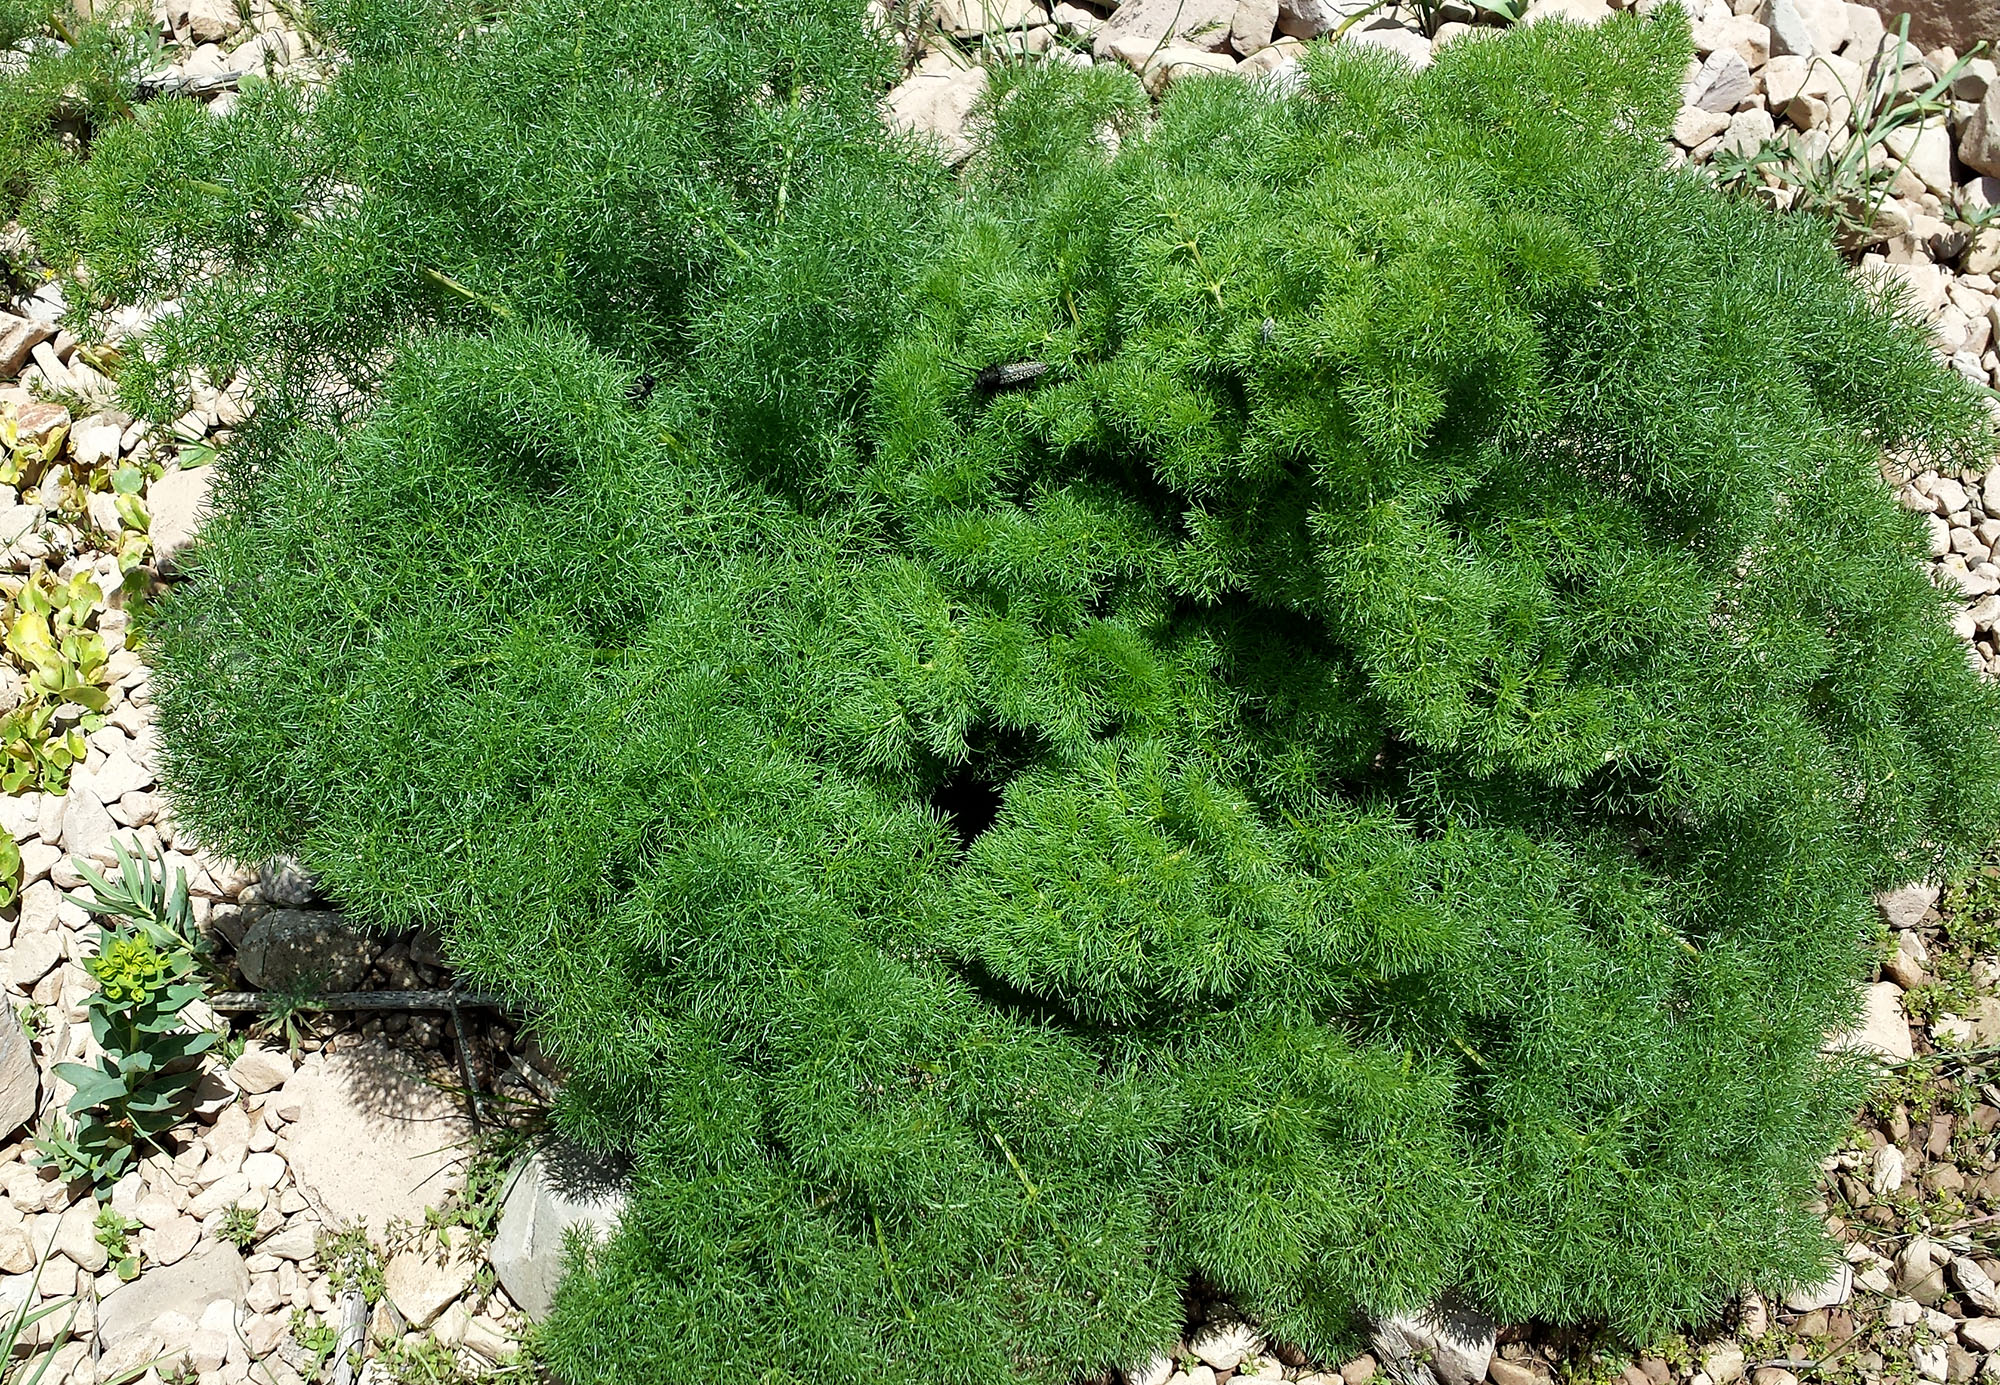 Mallosia mirabilis mirabilis - host plant